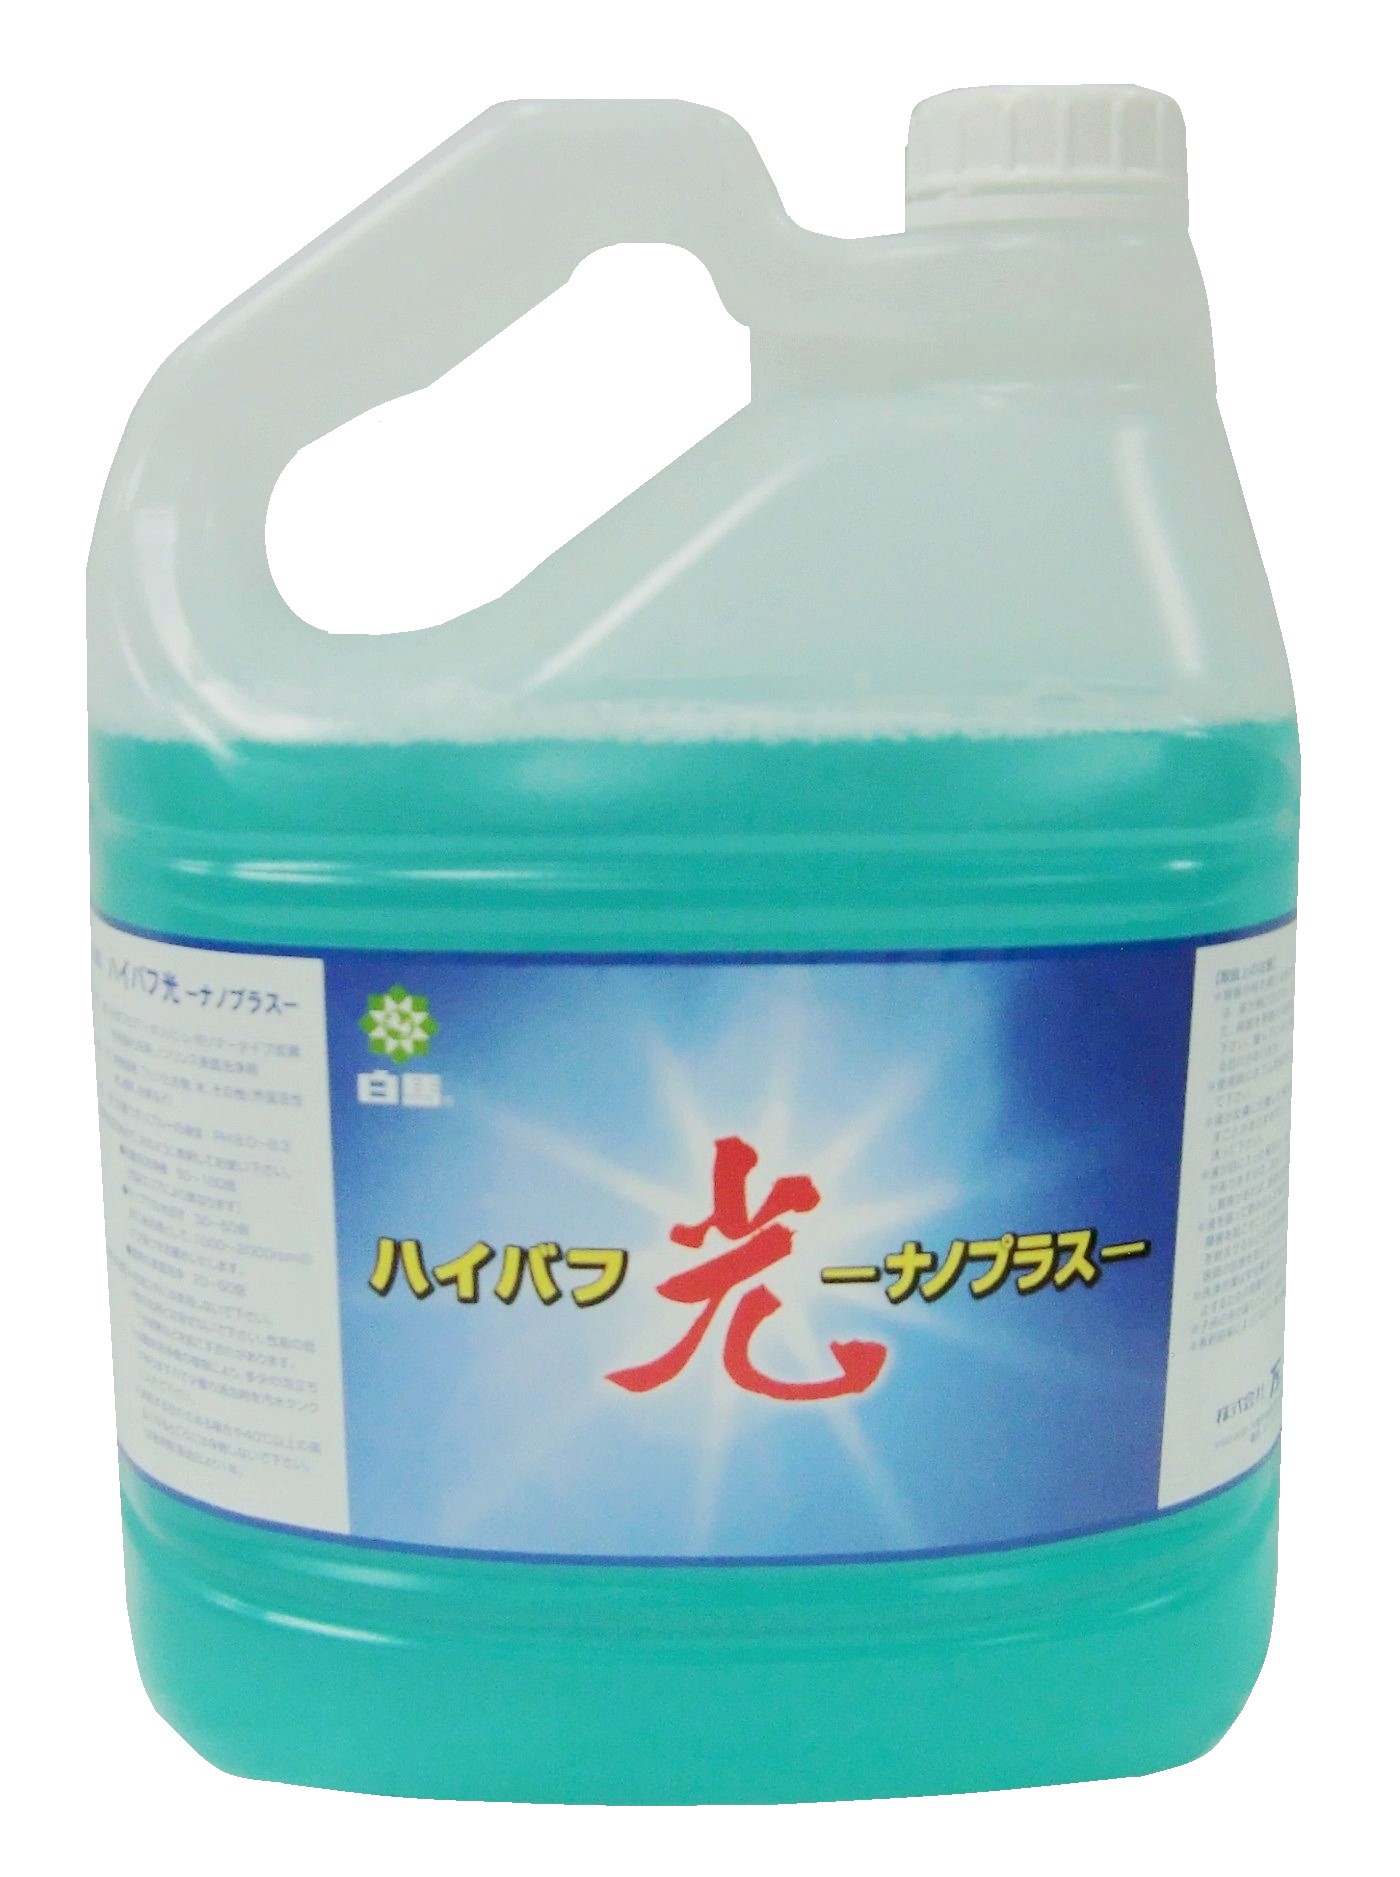 Hakuba HI-BUFF Hikari NANOPLUS 4L  Resin film reinforcing agent & surface cleaner